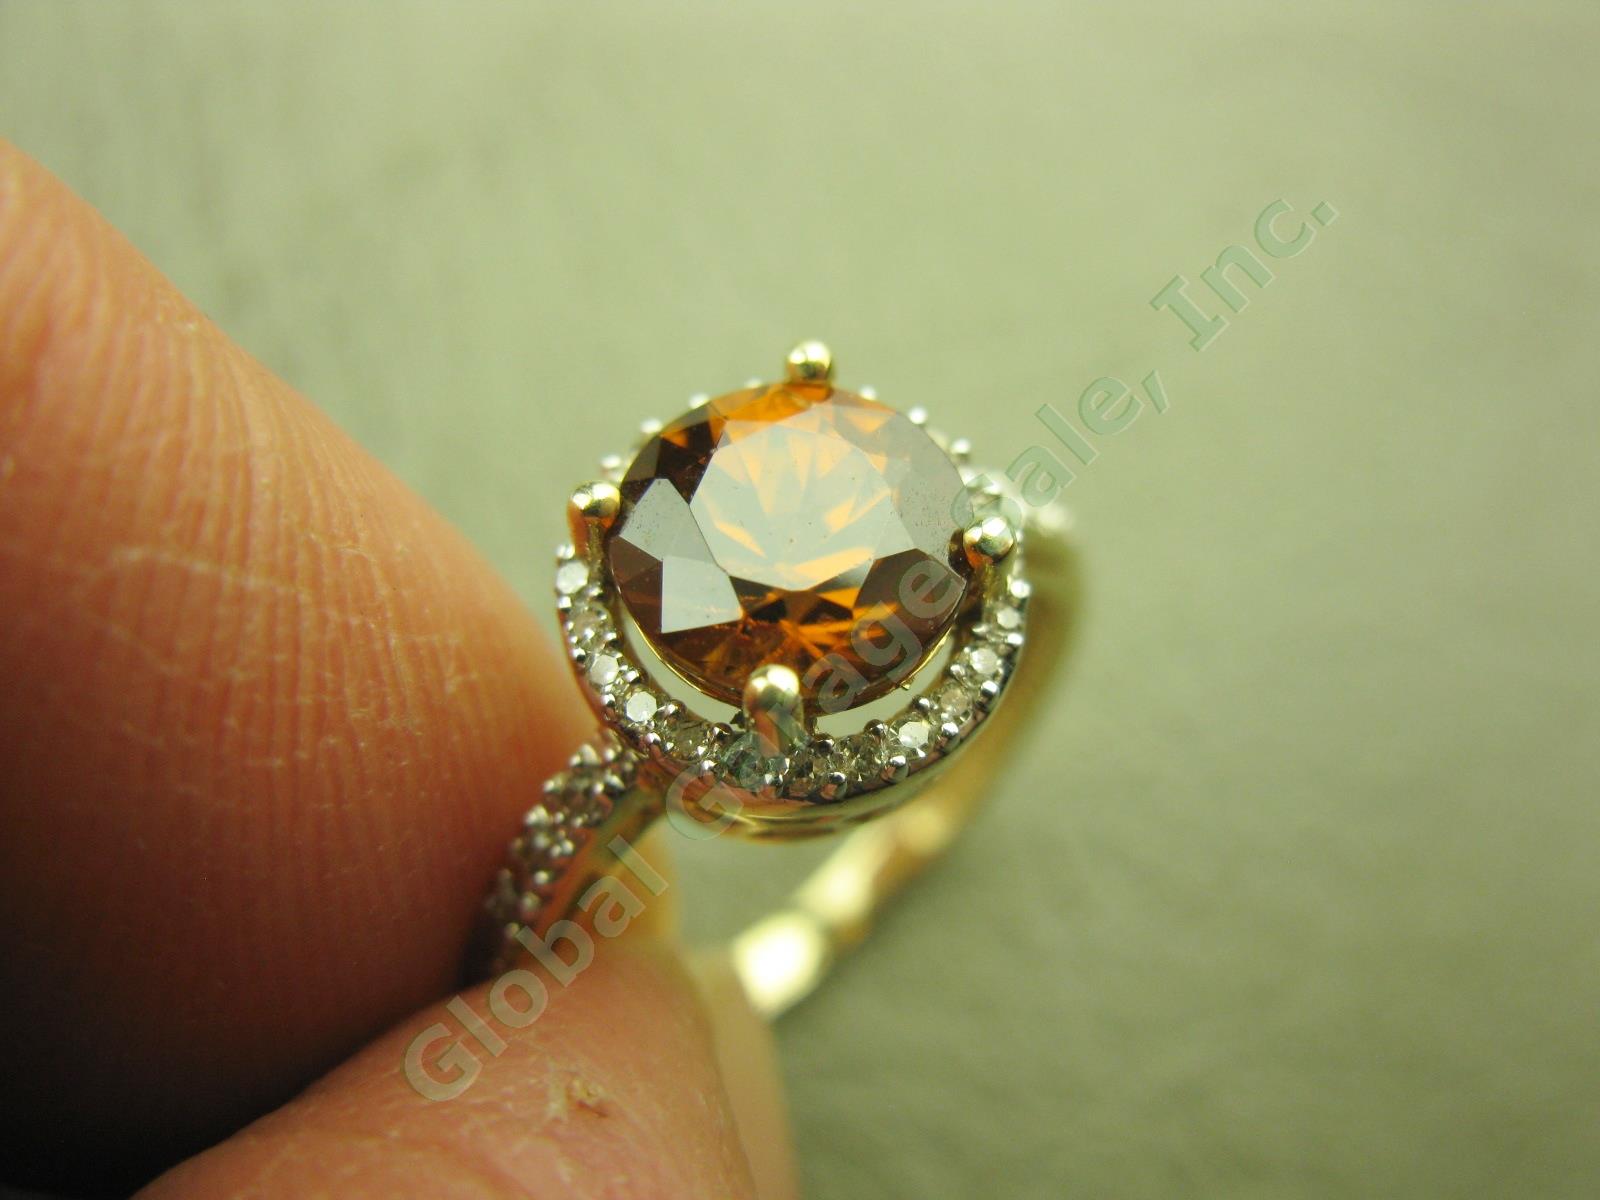 19x 14k 10k Gold Gemstone Rings Lot Earrings 57.7 Grams Not Scrap $1200+ Value!! 13